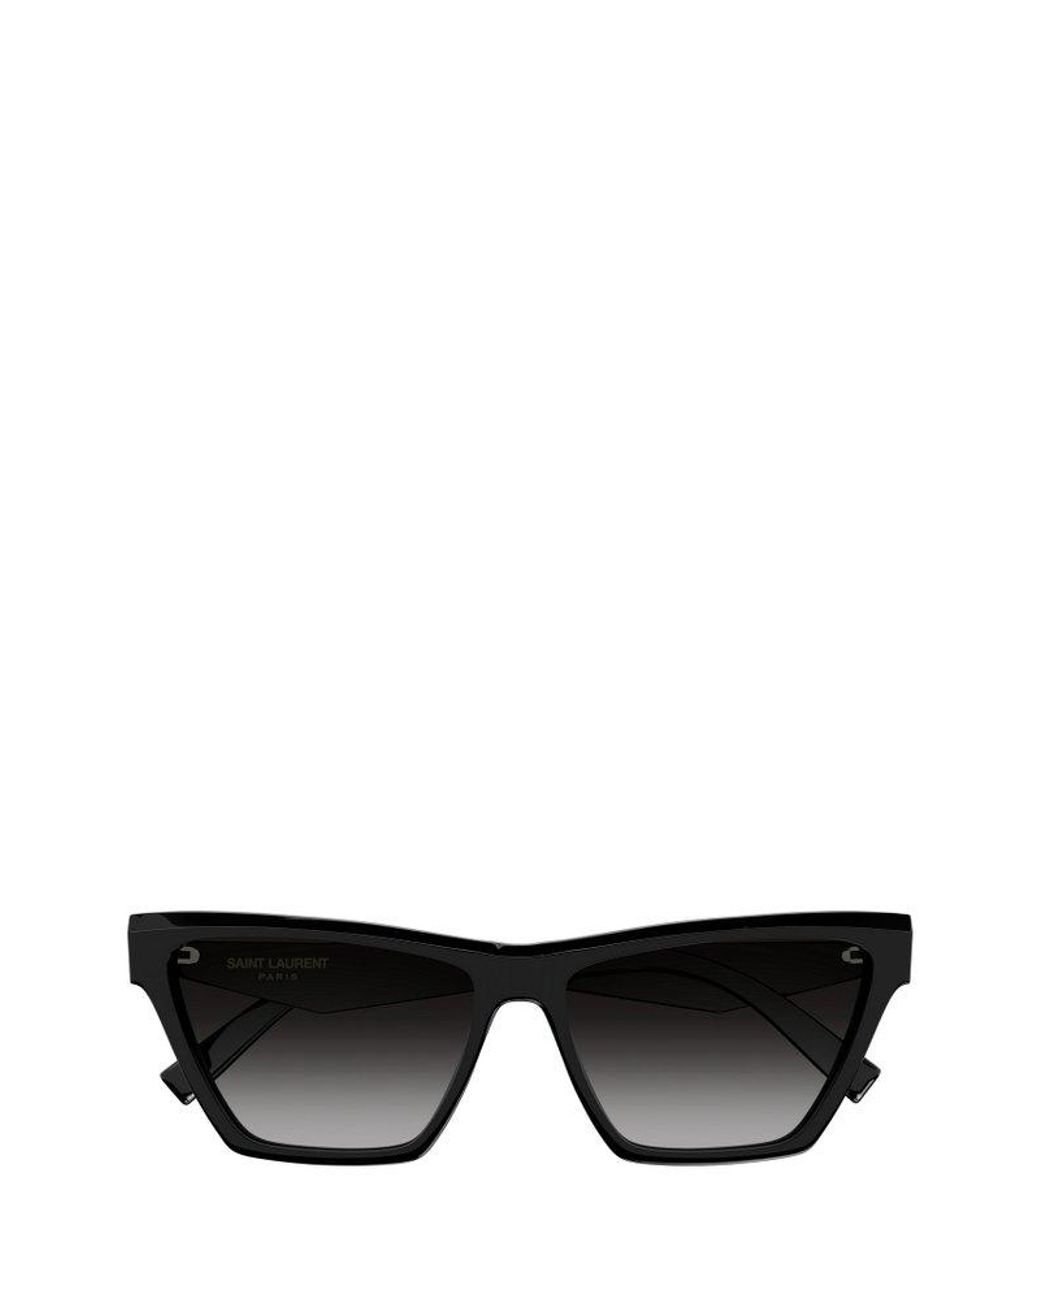 Saint Laurent SL M103 58 Black & Black Sunglasses